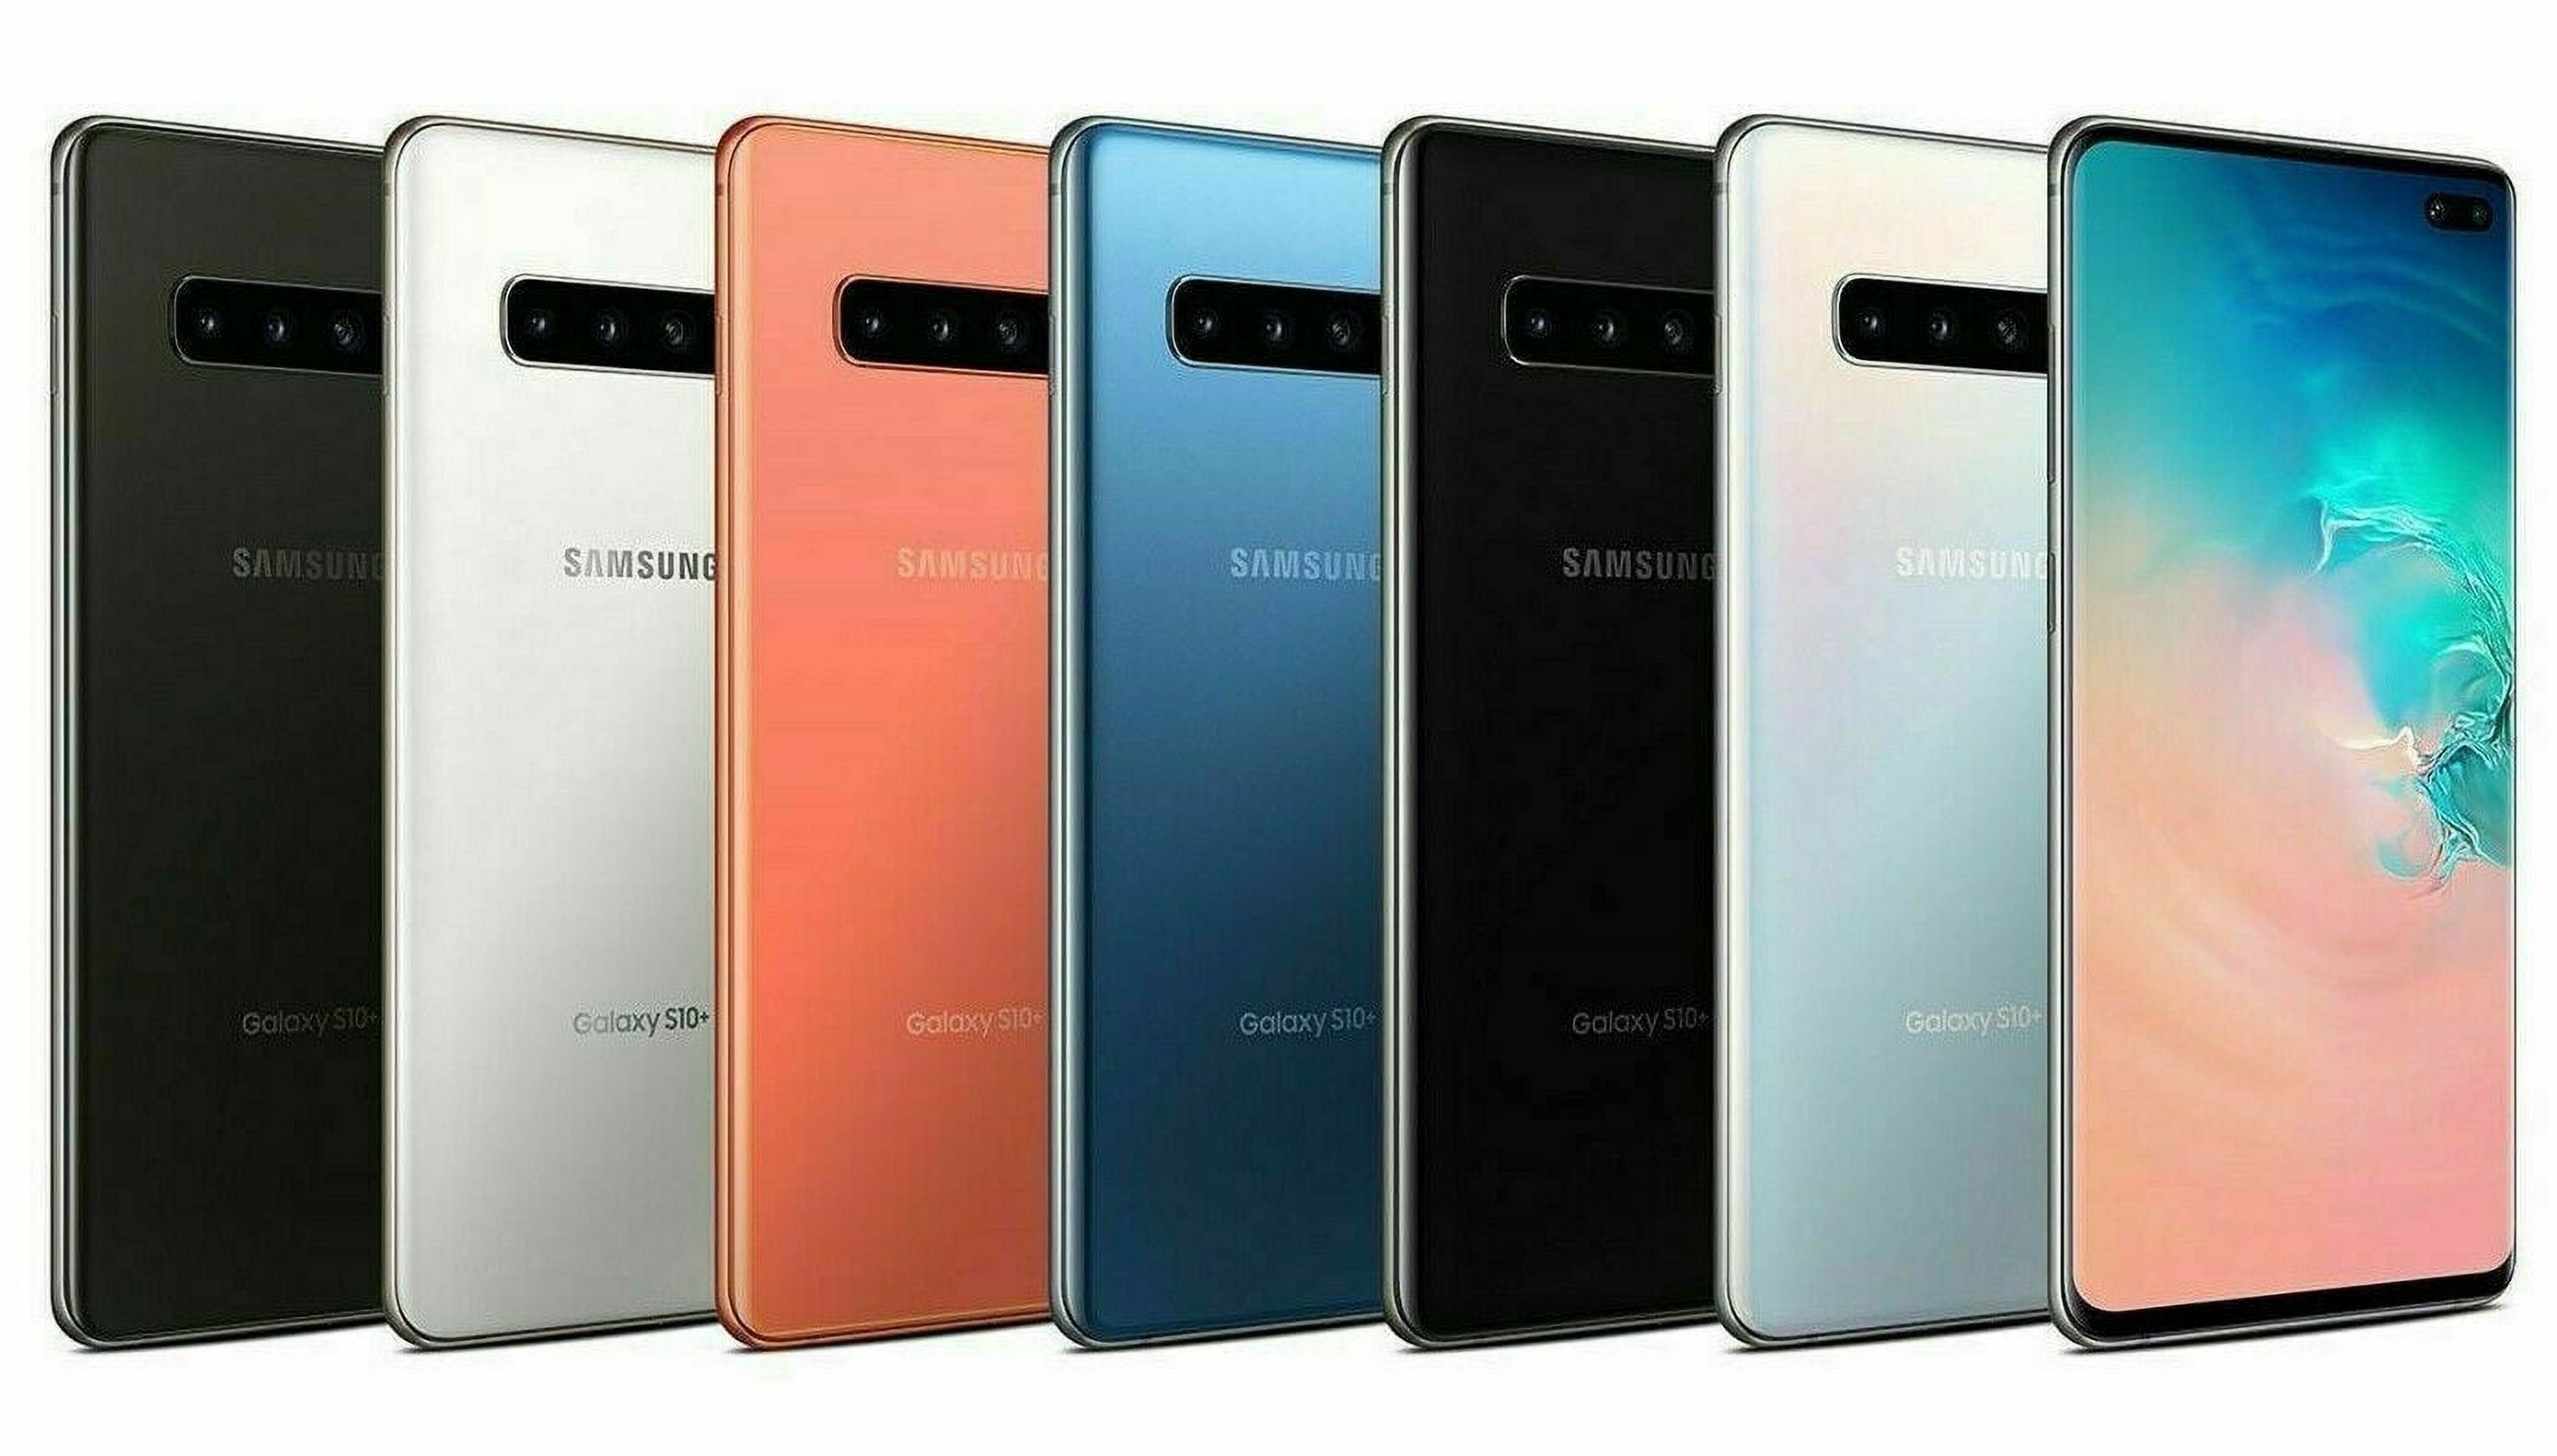 Samsung Galaxy S10+ Plus 128/512GB 1TB (SM-G975U1 Unlocked Cell Phones) Like New - image 1 of 6